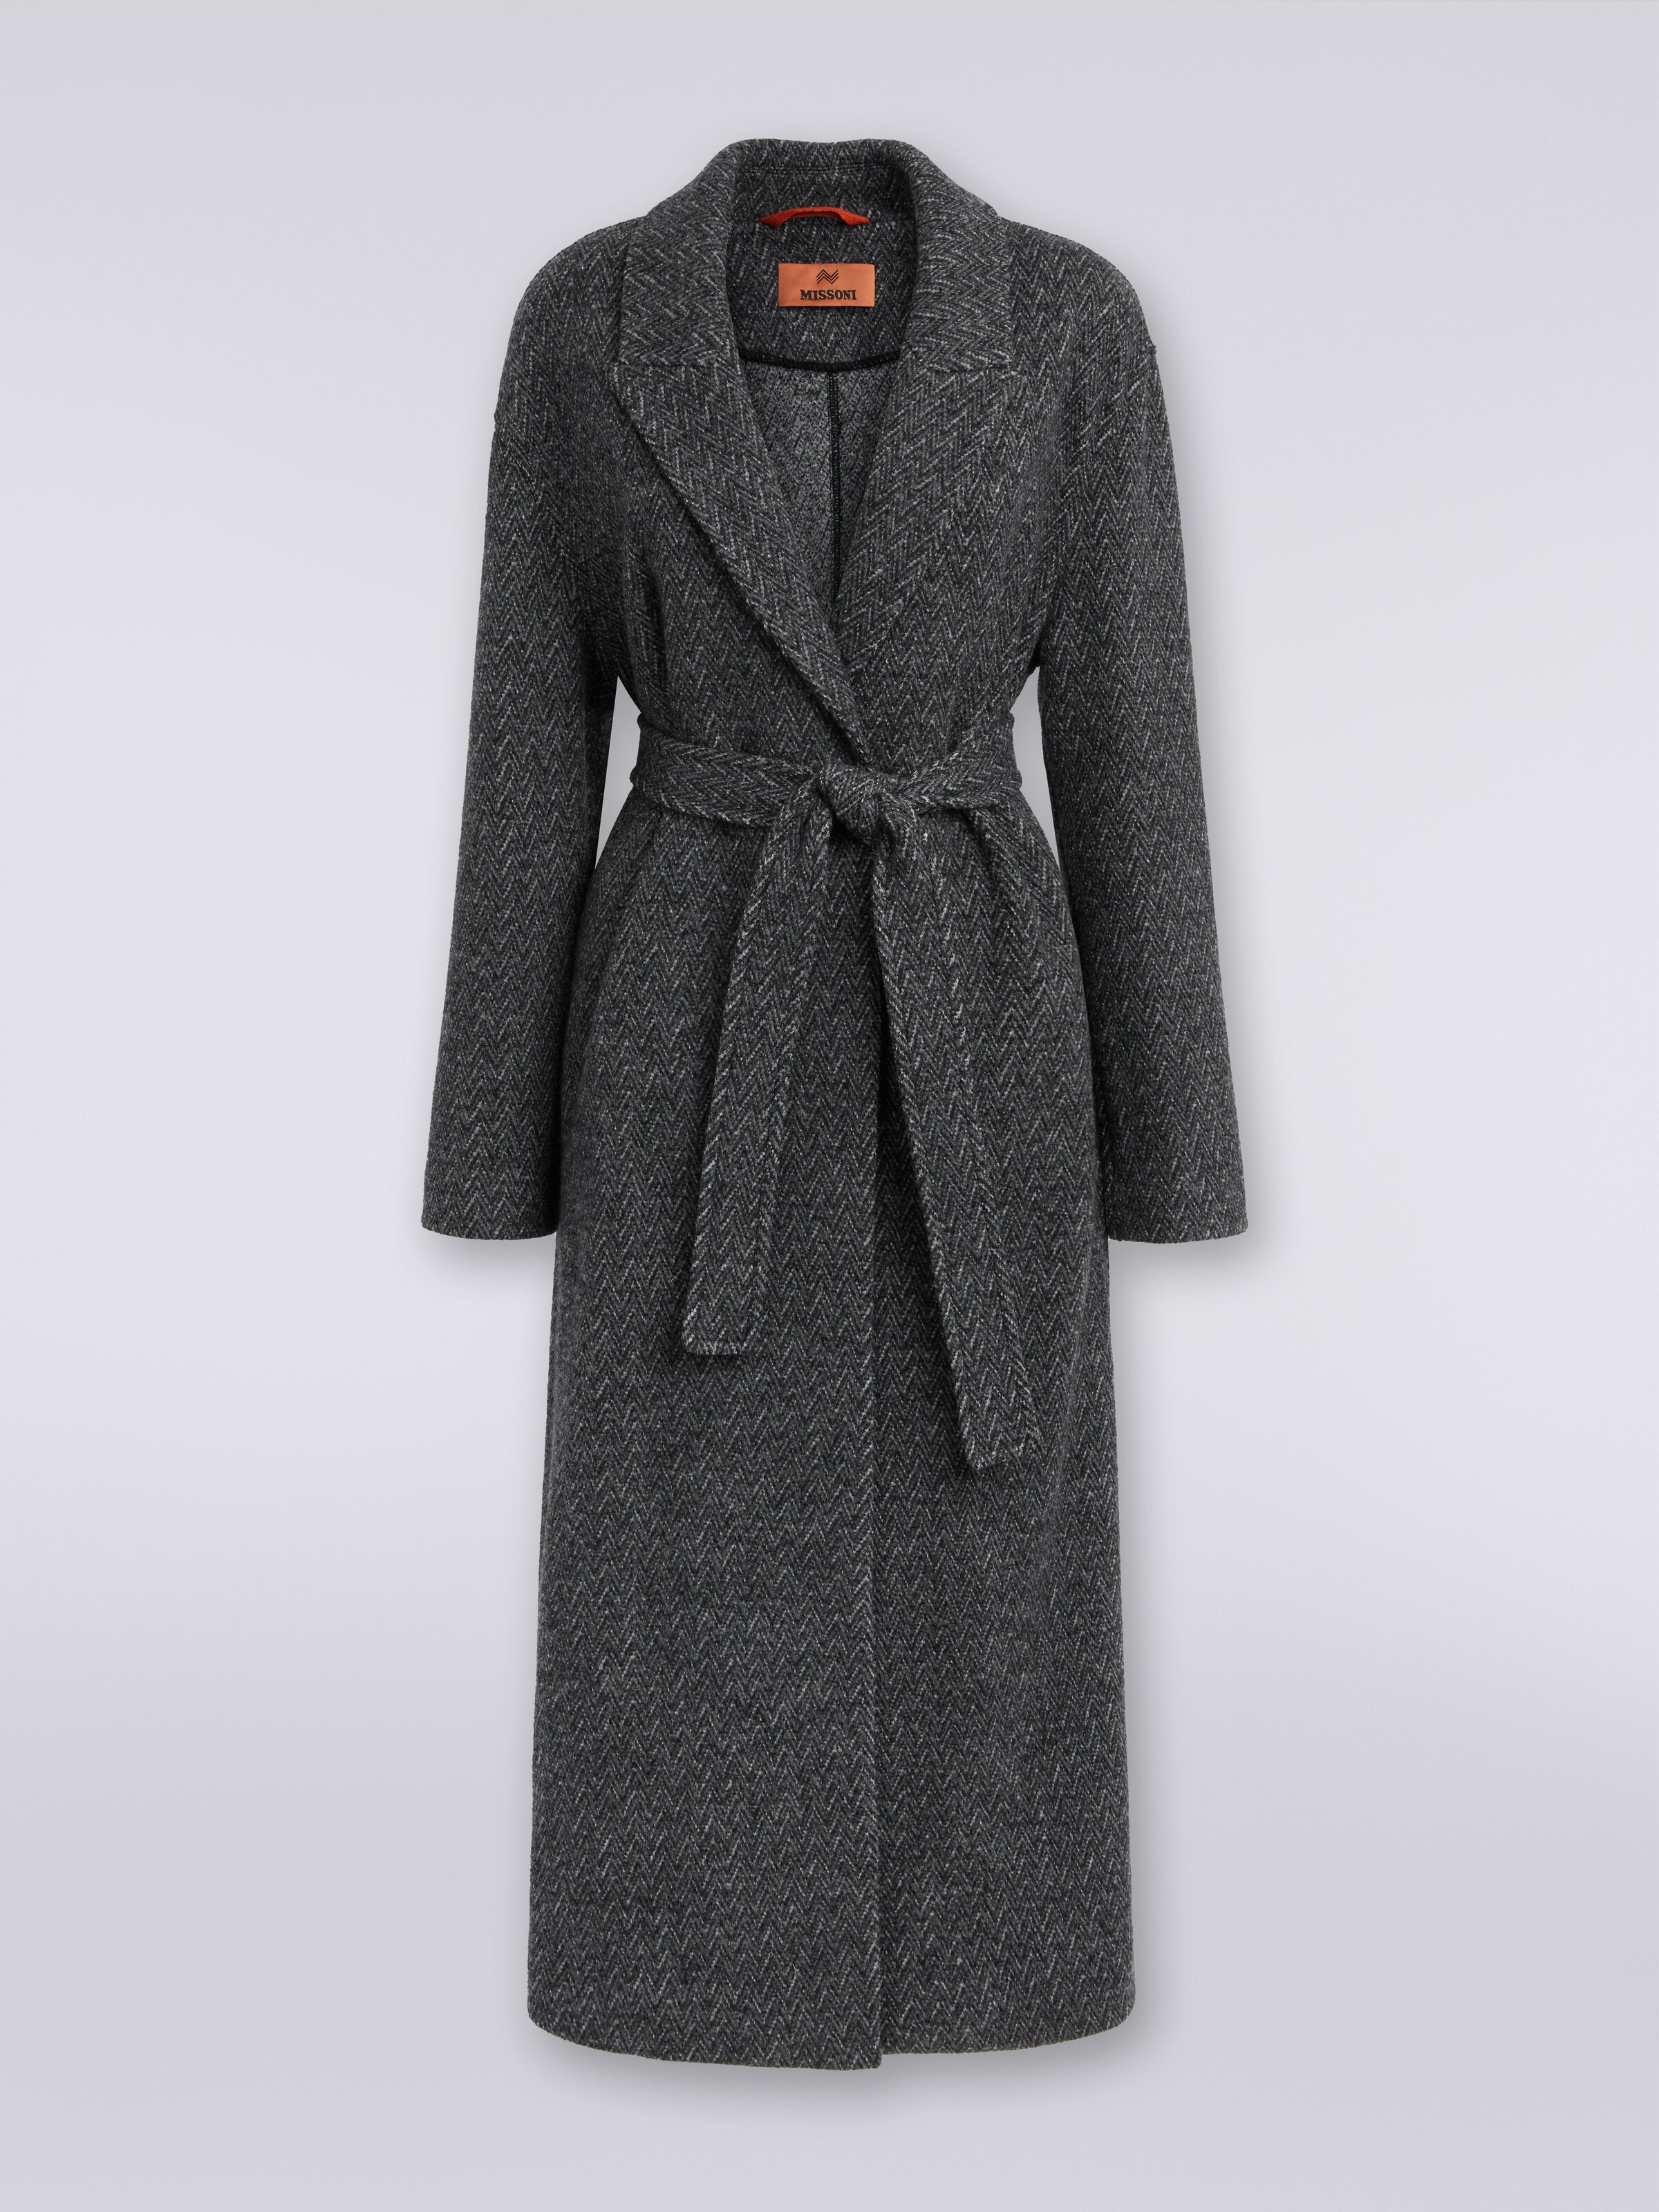 Wool coat with herringbone pattern, Black    - 0